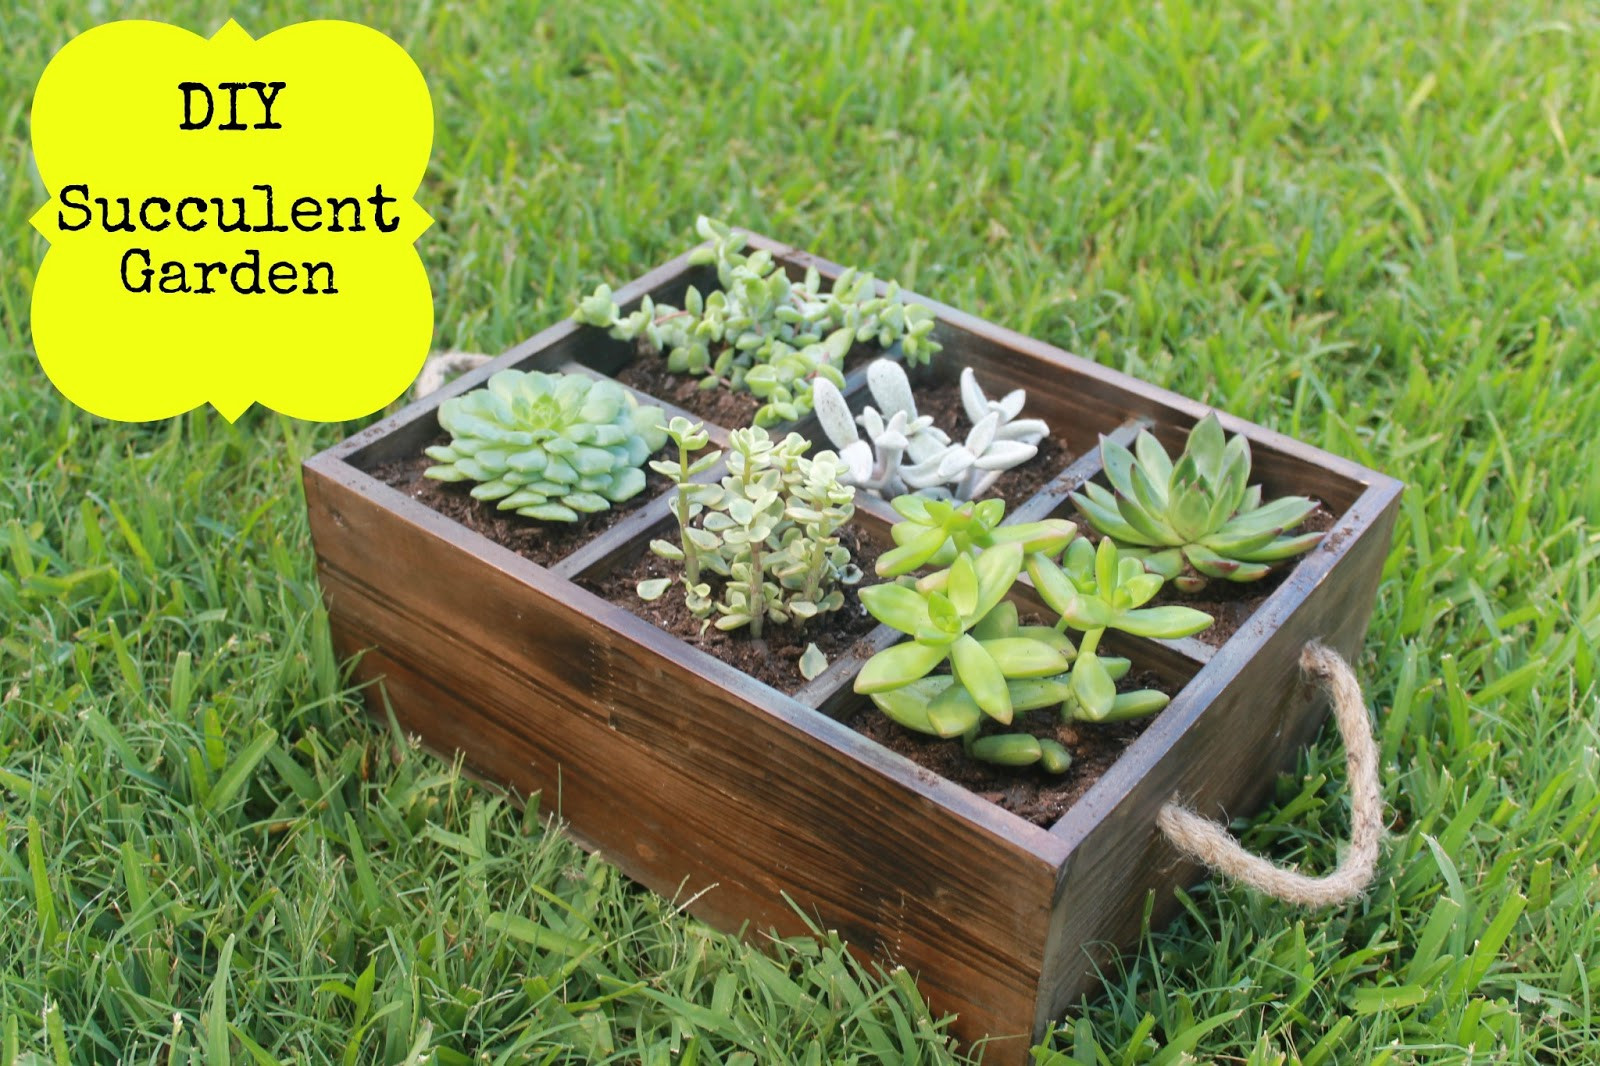 Best ideas about DIY Succulent Gardens
. Save or Pin DIY Succulent Garden Haute Mommy Blog Now.